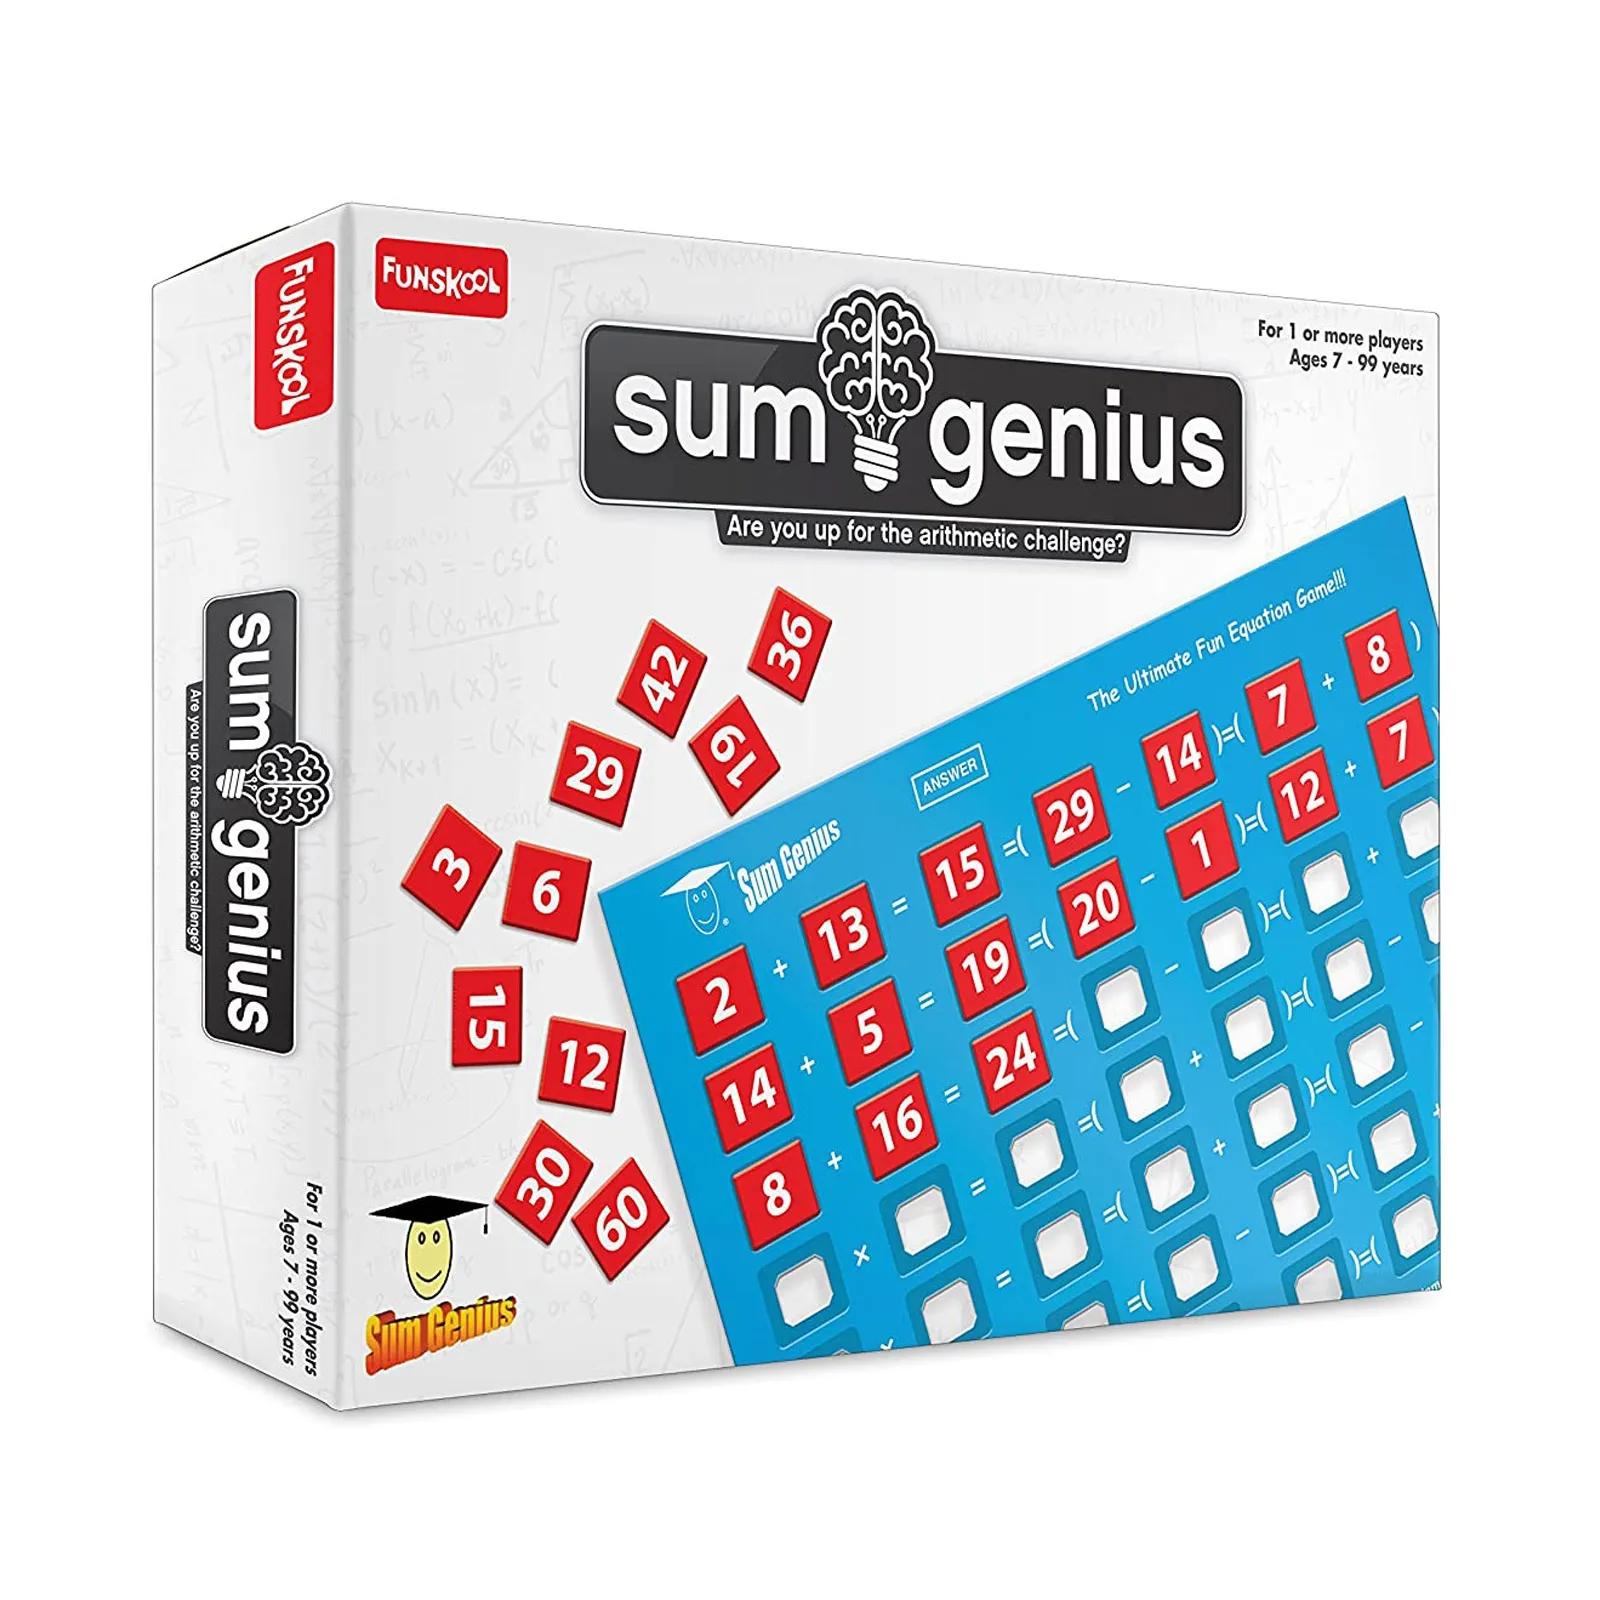 Funskool Sum Genius Ultimate Fun Equation Game